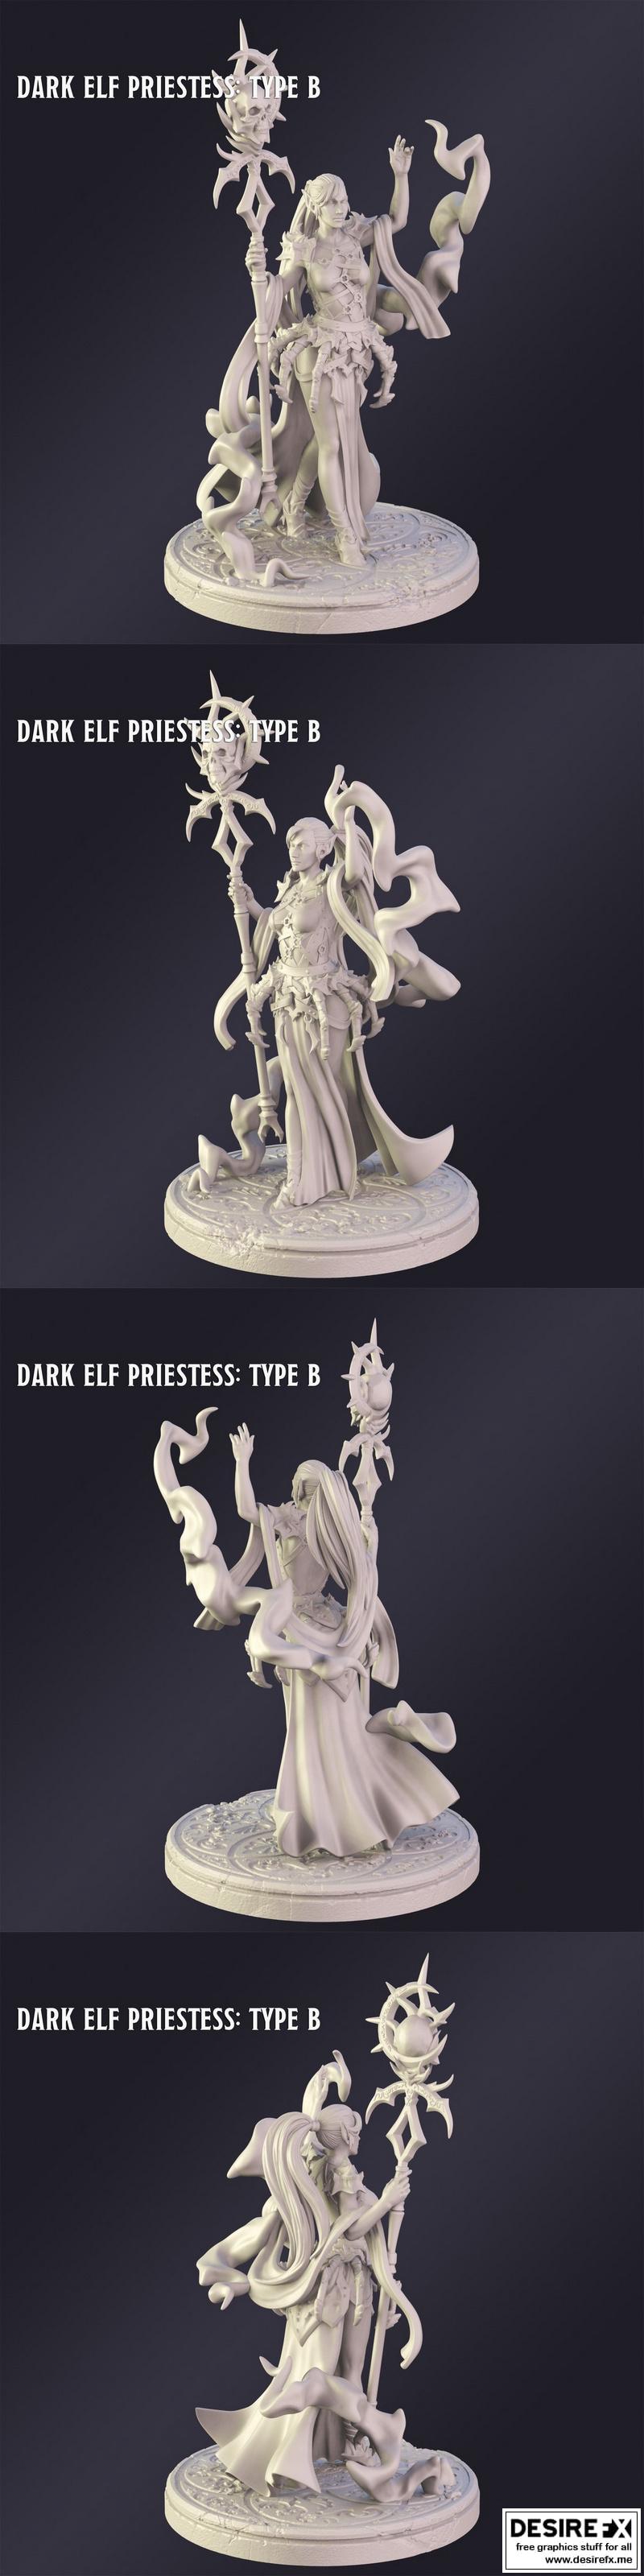 Desire FX 3d models | Dark Elf Priestes Type B